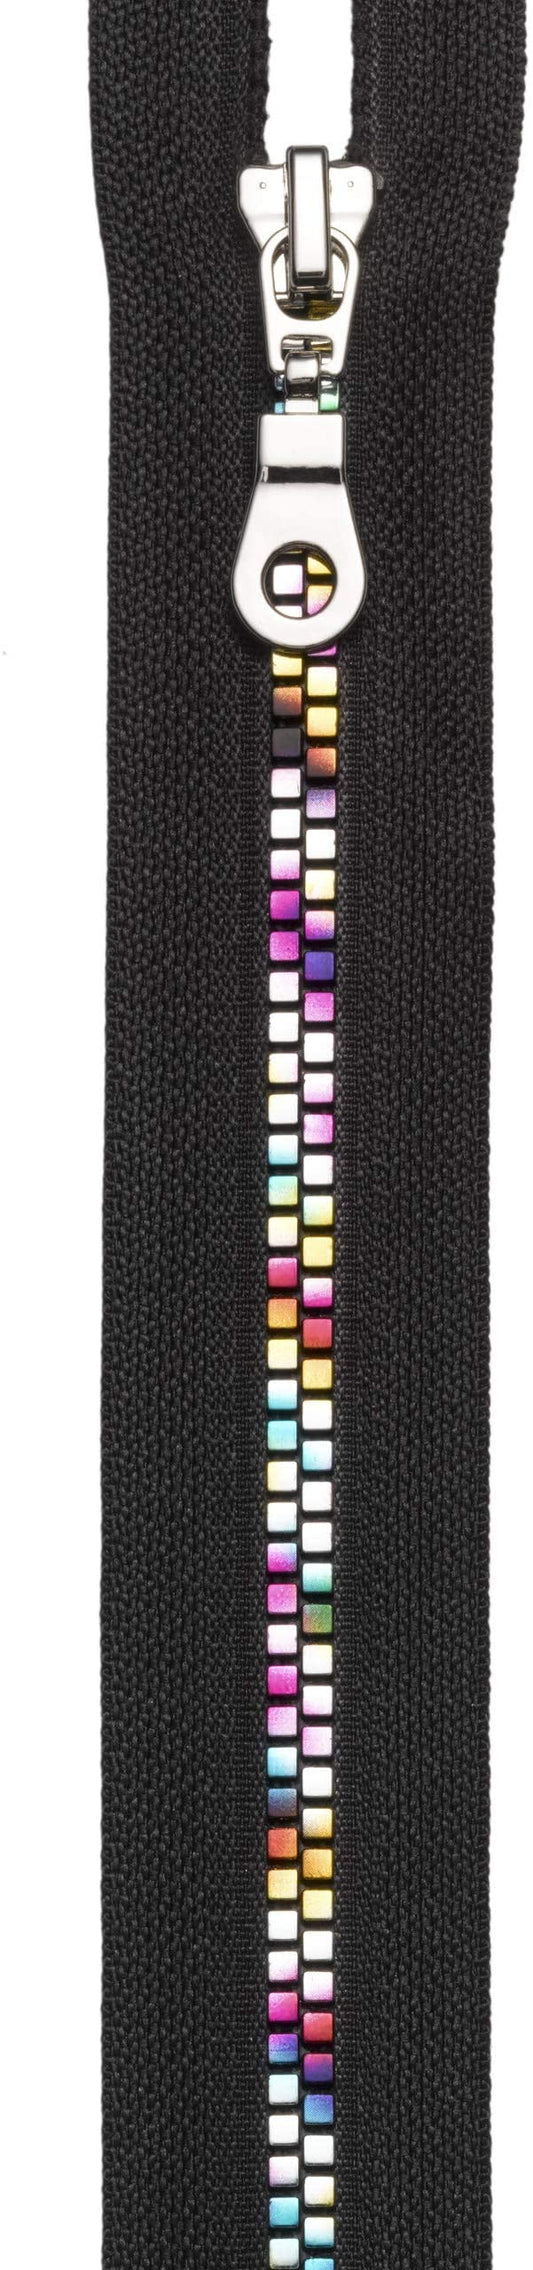 Prym Separating Zipper - 50cm Black/Rainbow